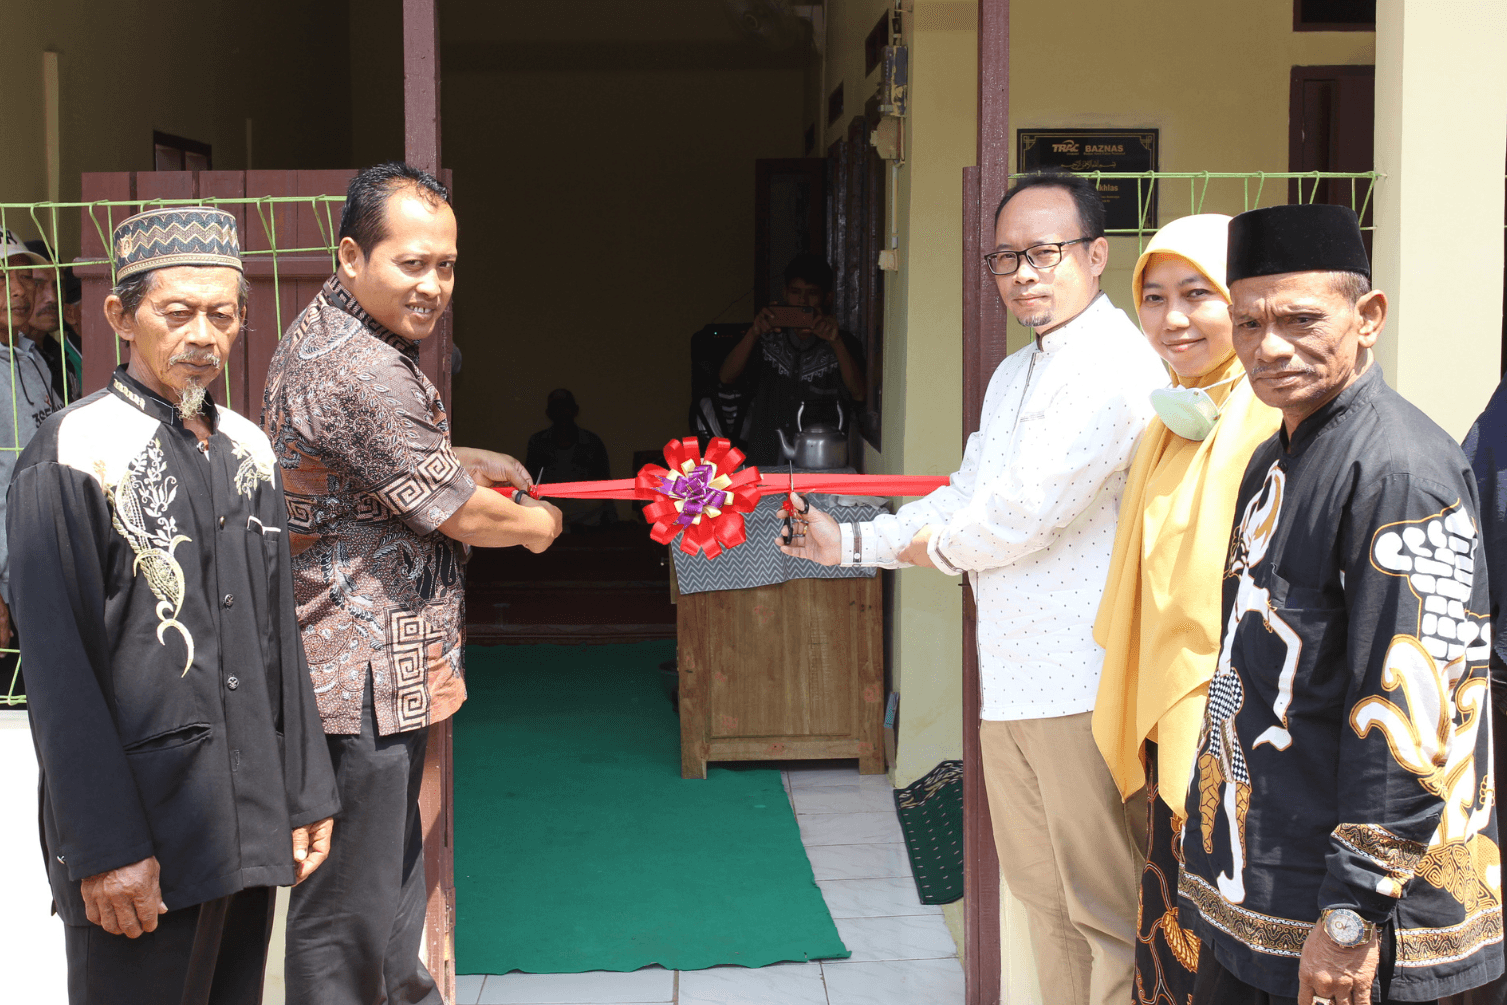 Gandeng BAZNAS, TRAC Syariah Resmikan Mushola Al-Ikhlas Bogor